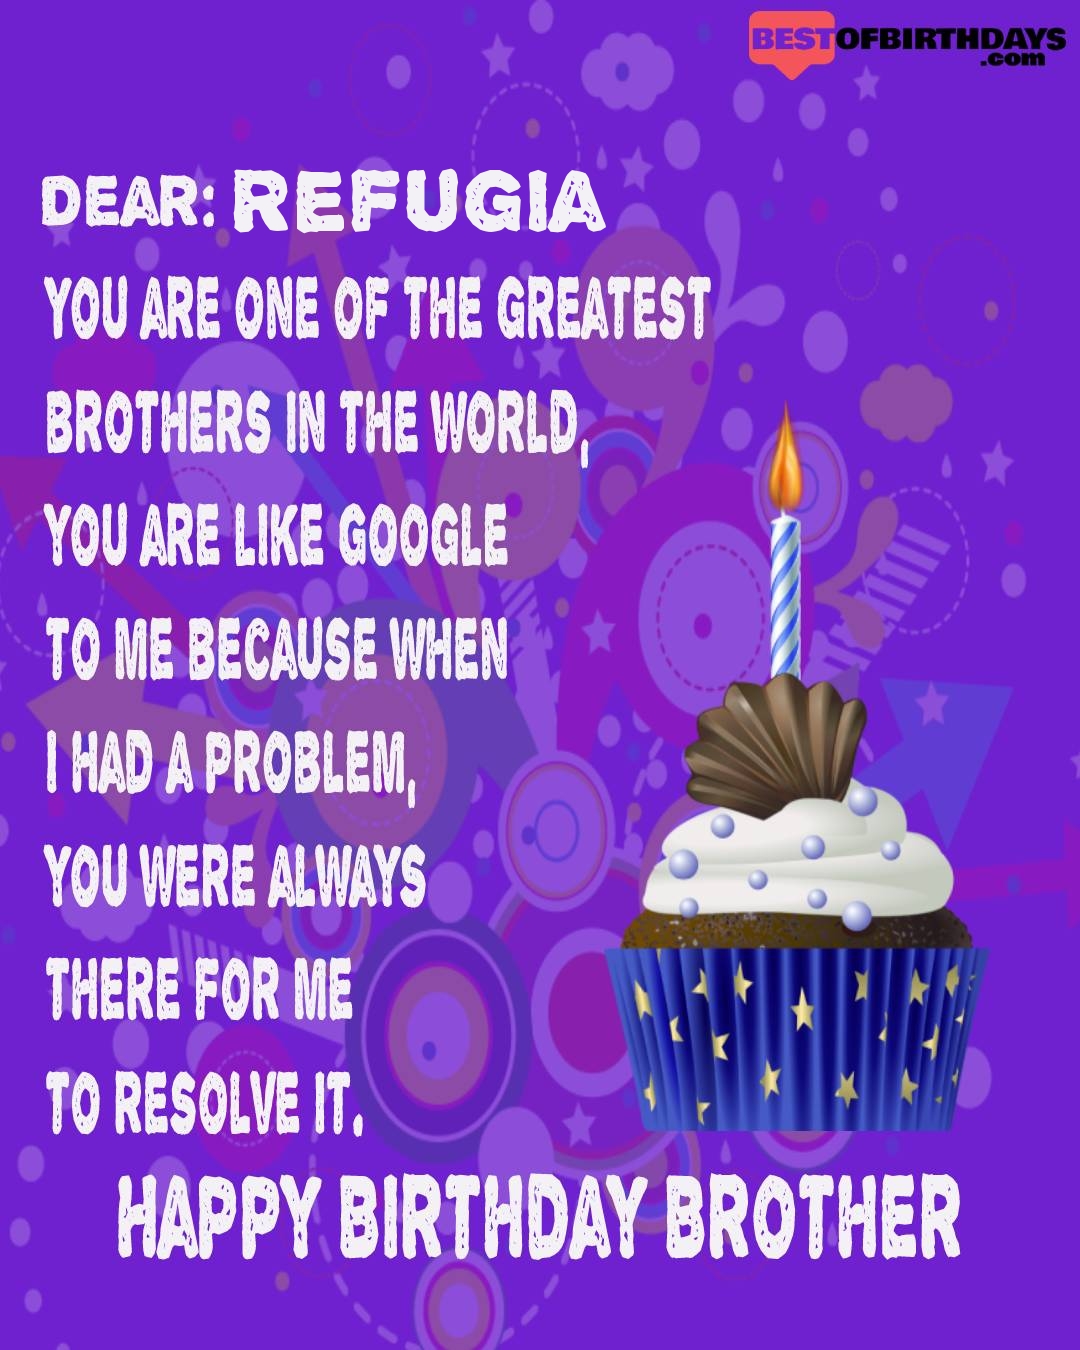 Happy birthday refugia bhai brother bro